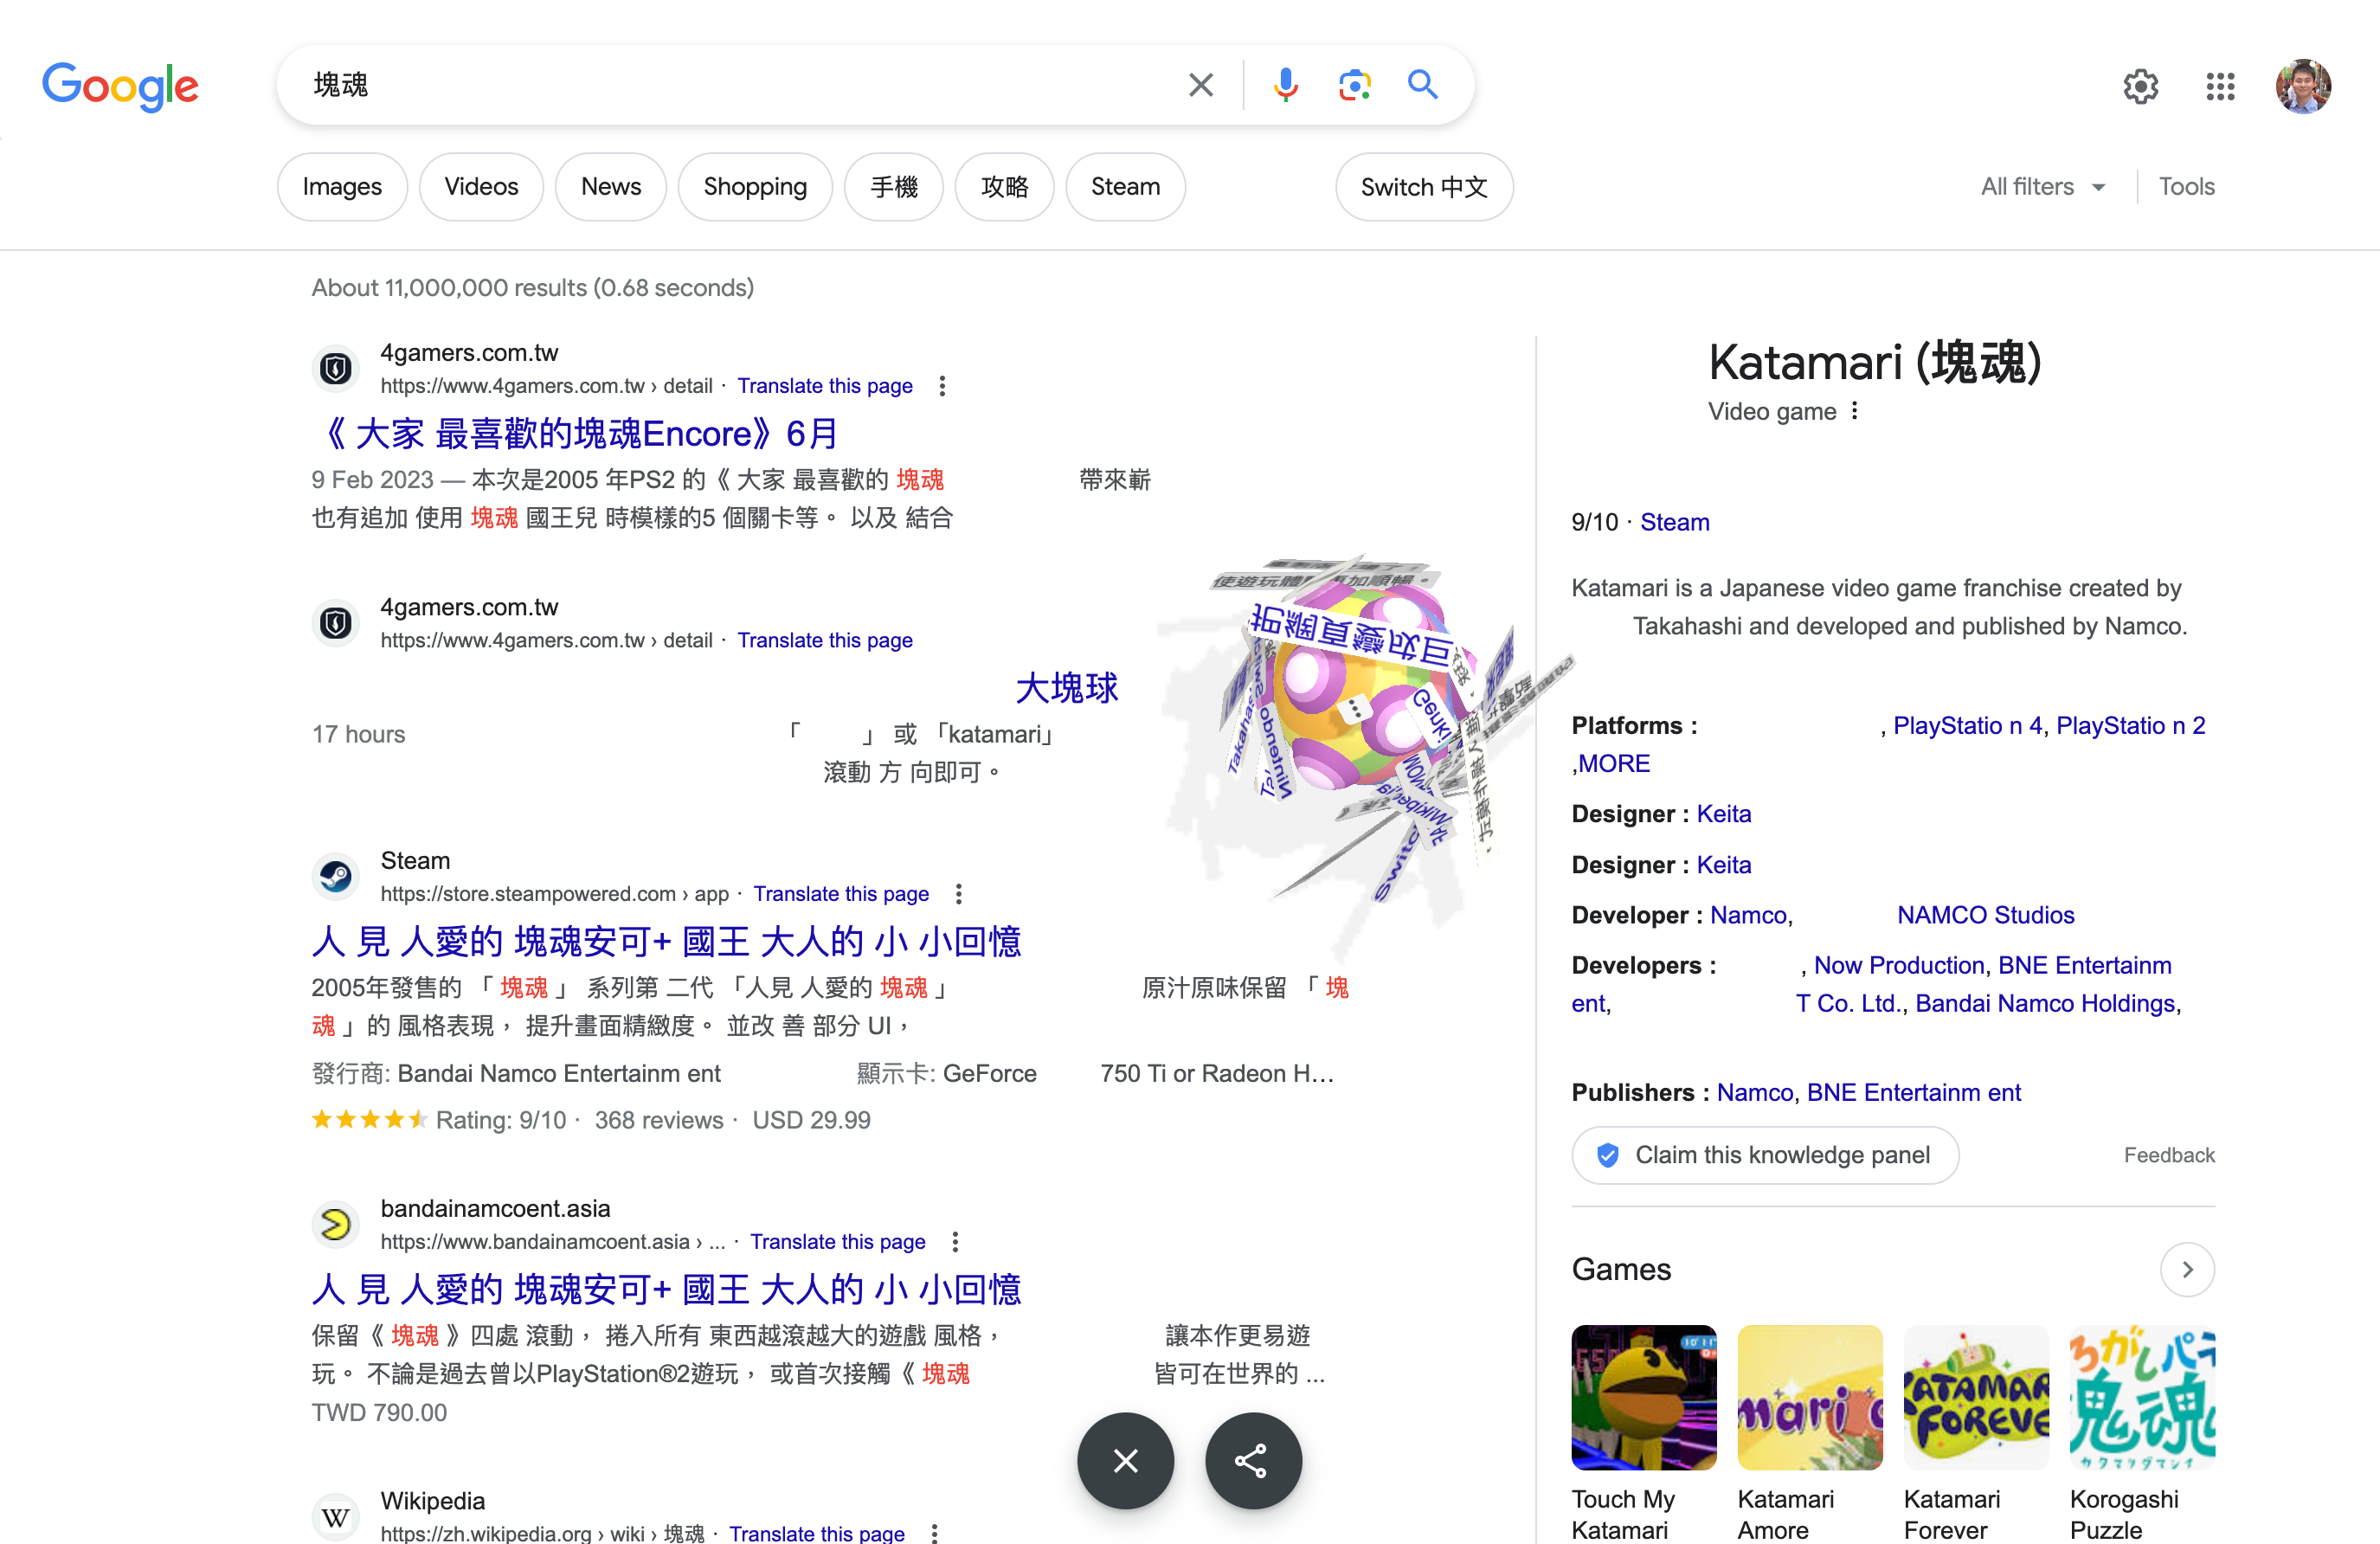 Google's Latest Easter Egg: A Katamari Minigame